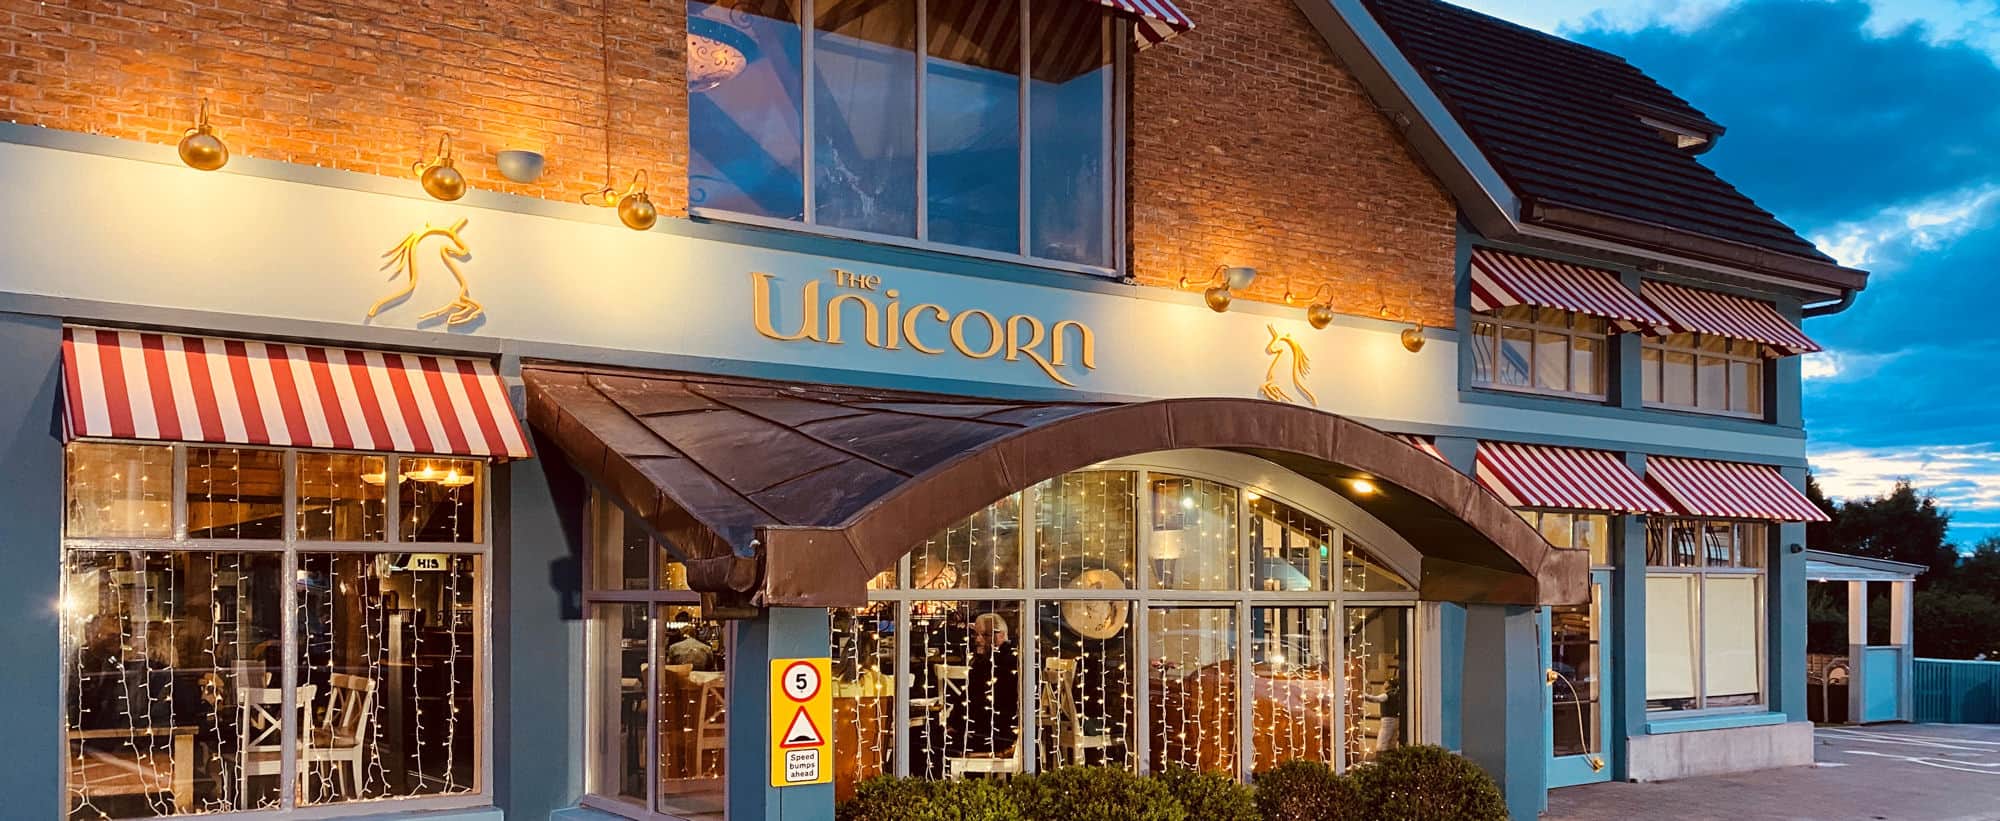 The Unicorn Bar and Restaurant Limerick